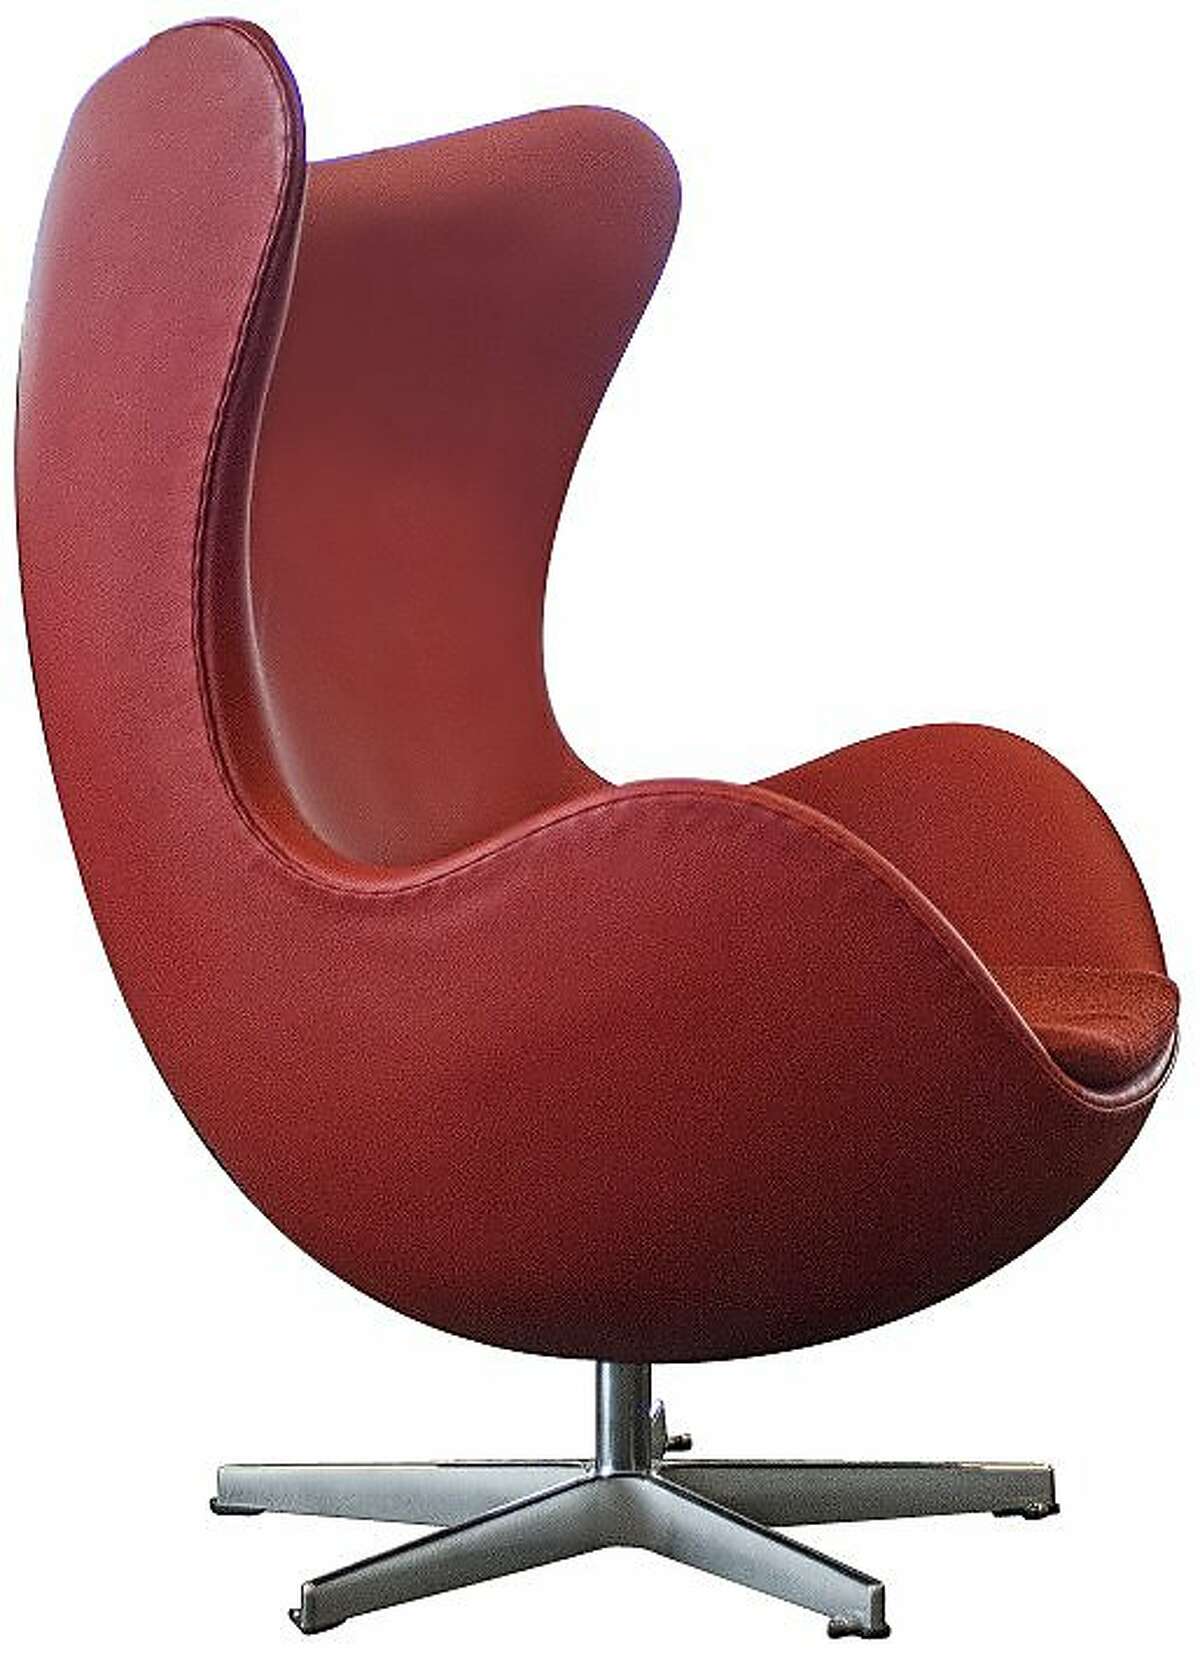 SFO: Arne Jacobsen Swan and Egg chair